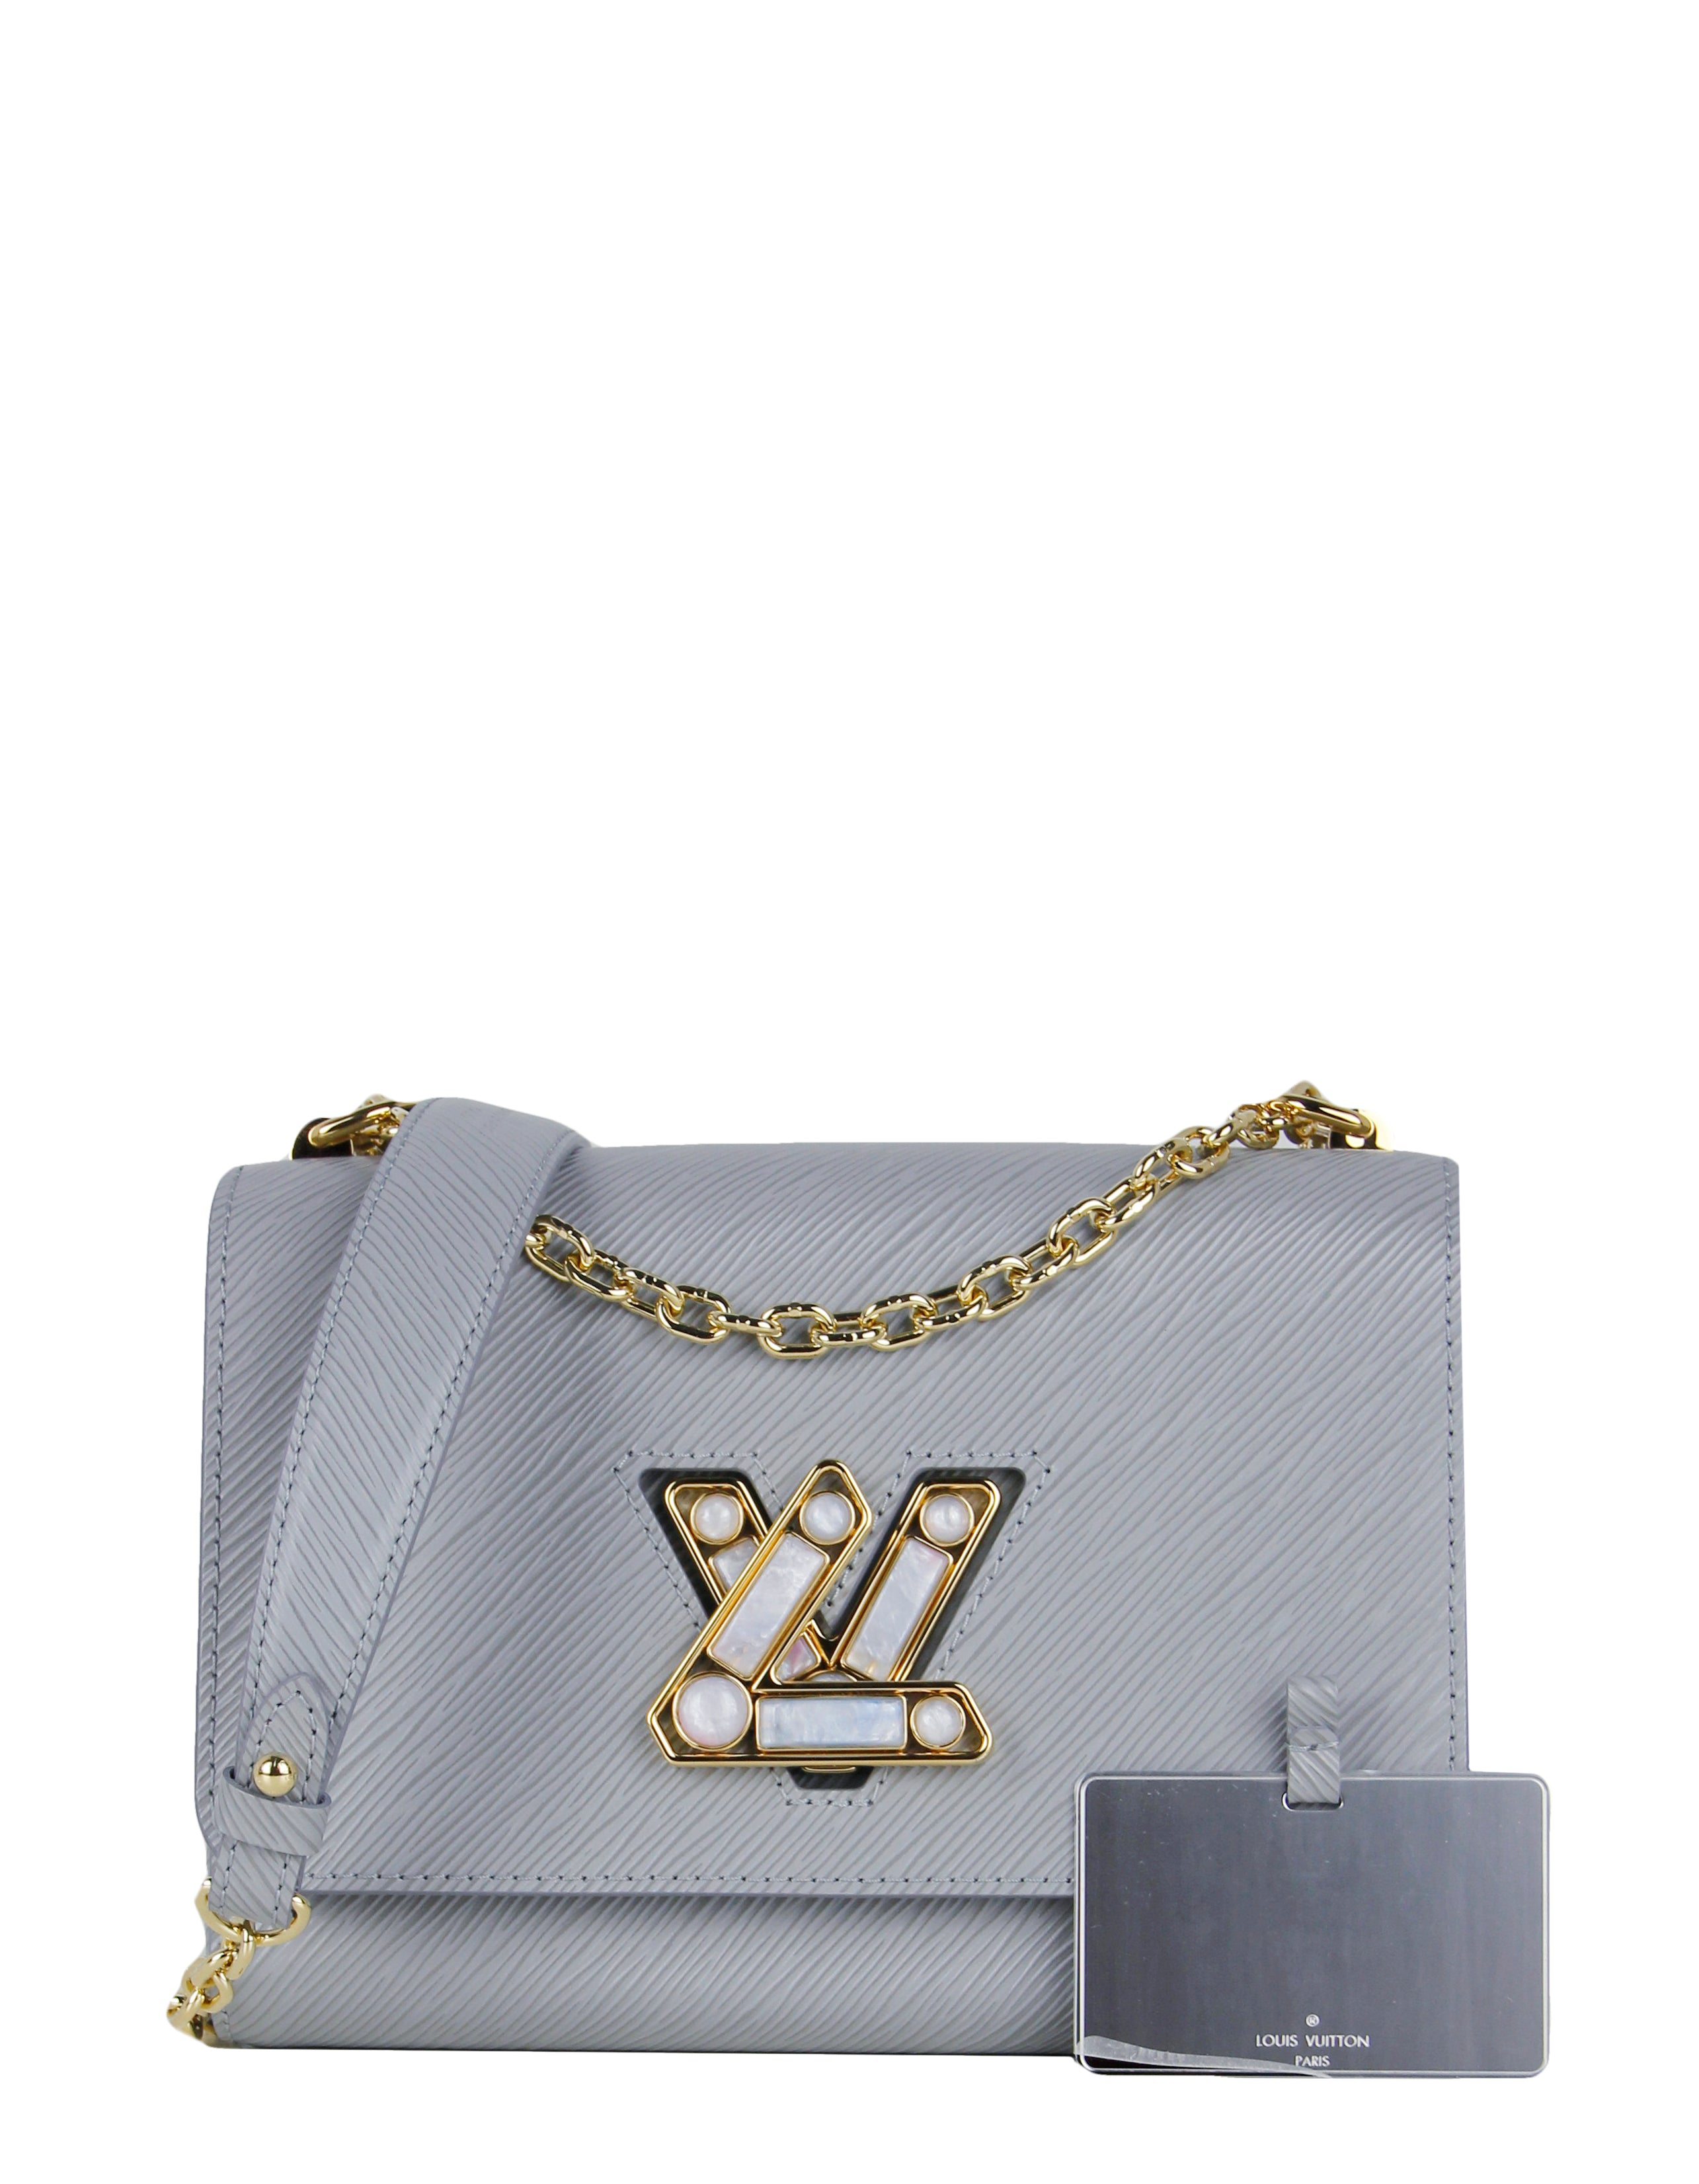 Louis Vuitton Twist MM Bag Review  Luxury Shopping at LV in Paris 